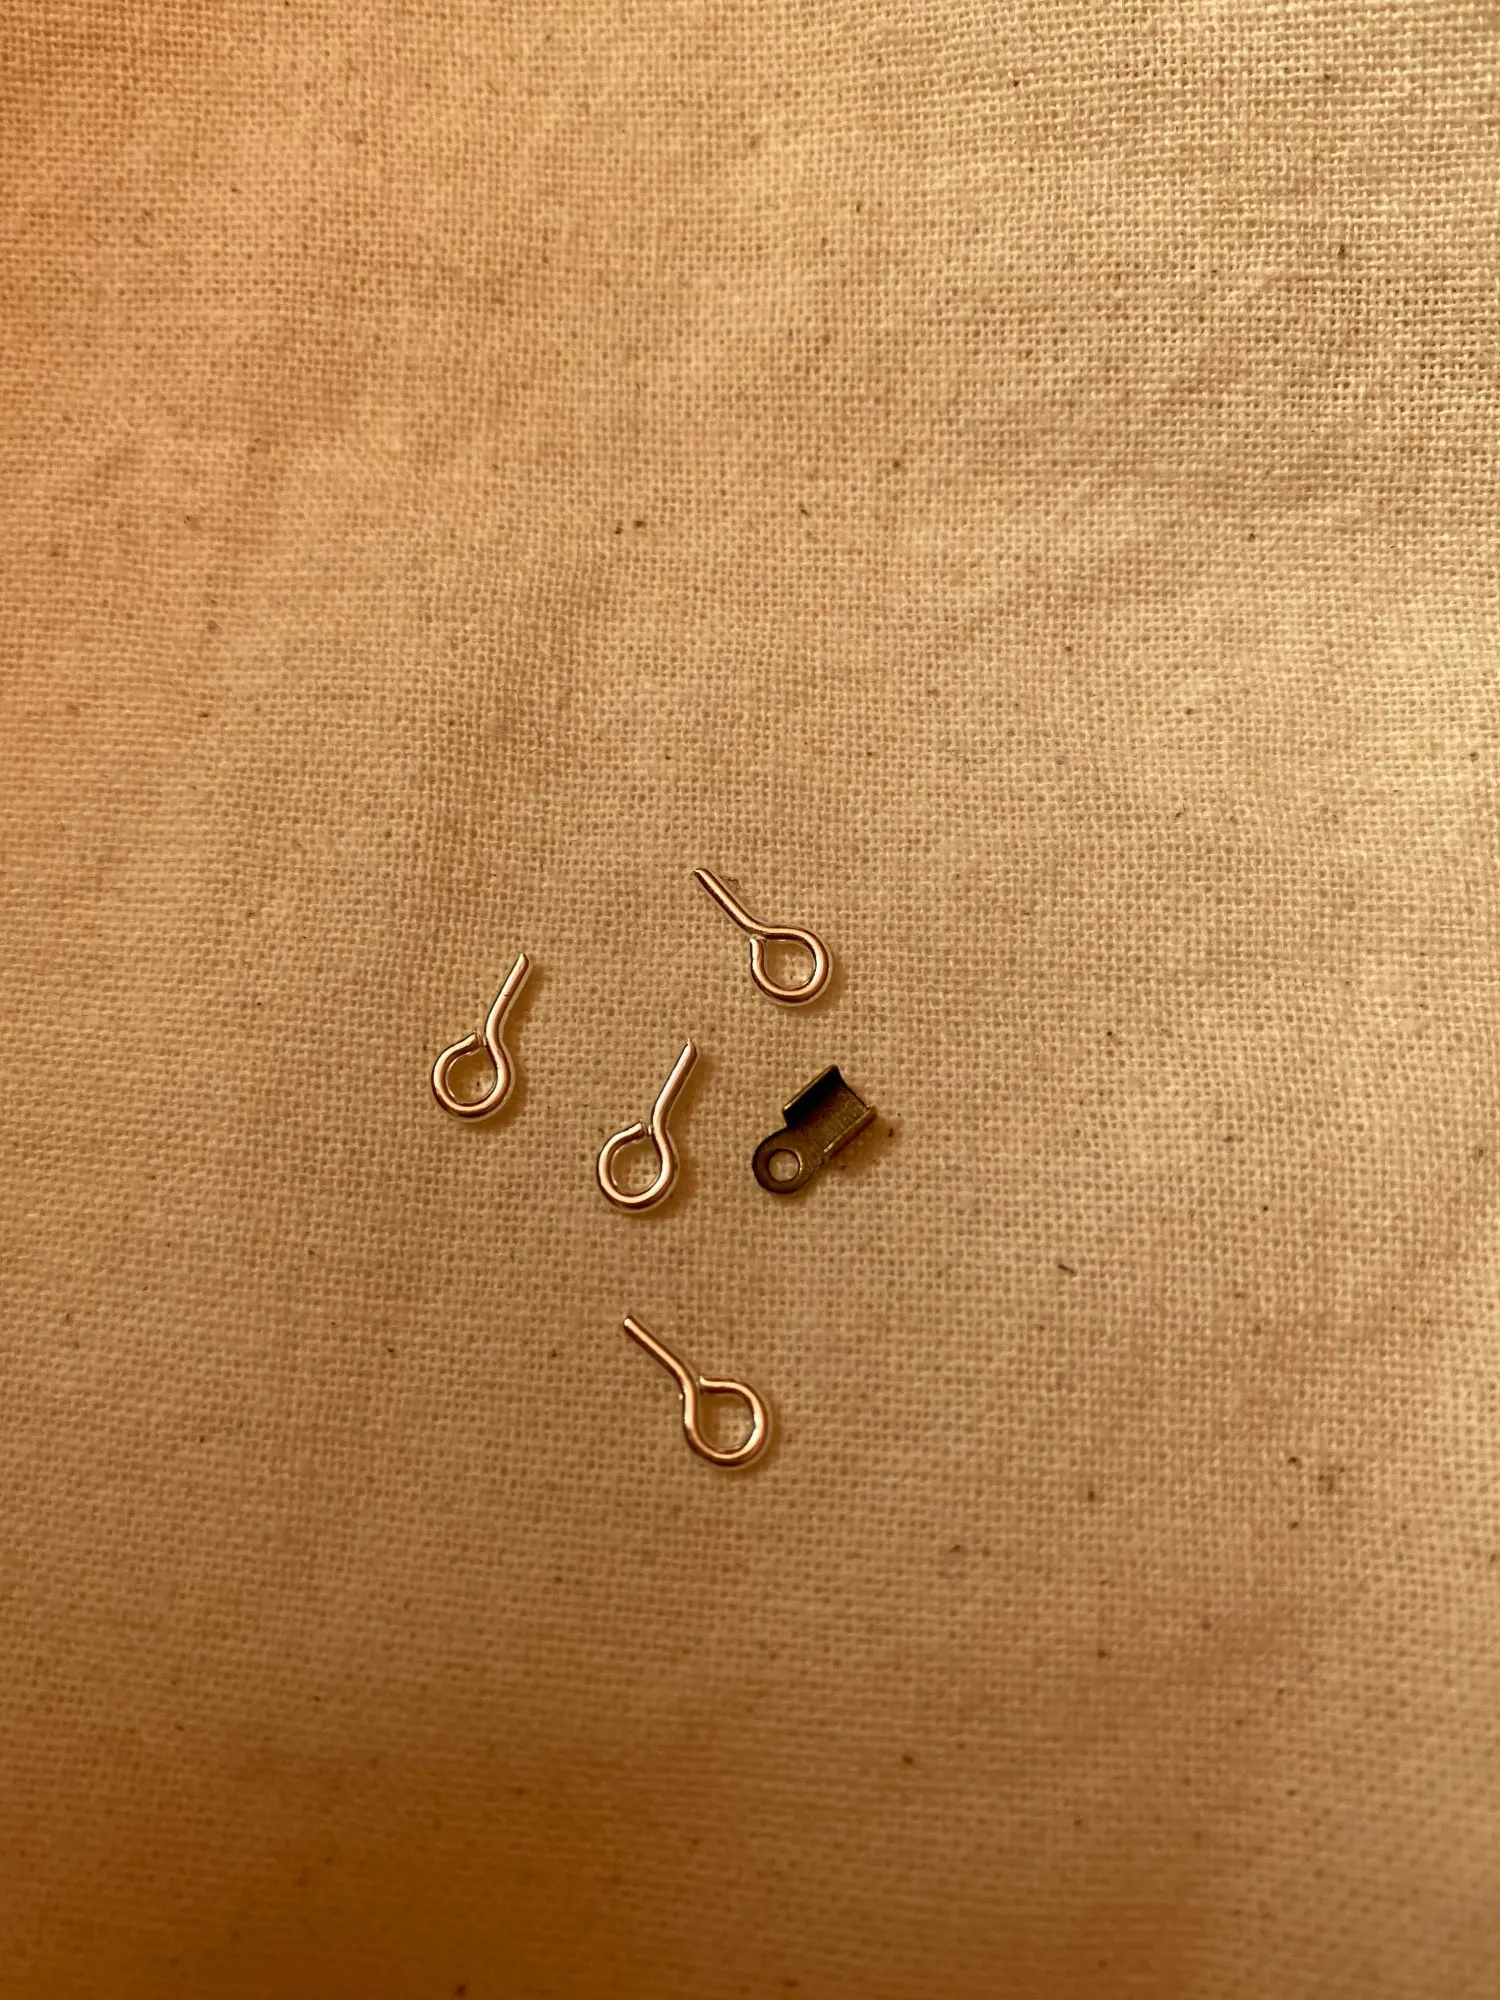 200pcs Small Tiny Mini Eye Pins Eyepins Hooks Eyelets Screw Threaded Gold Clasps Hooks Jewelry Findings For Making DIY